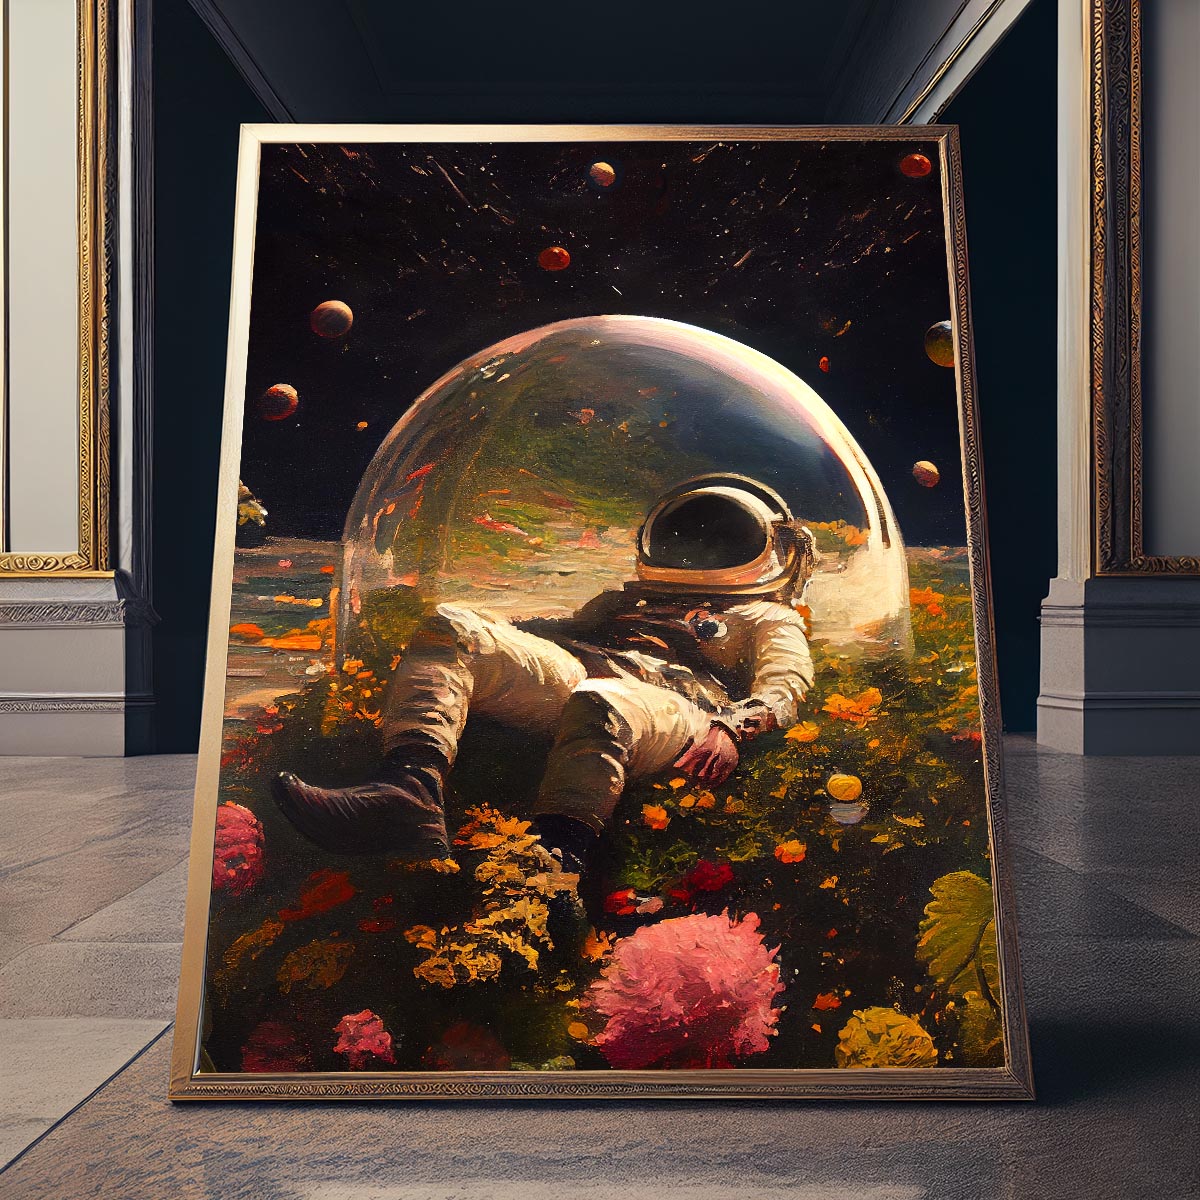 "My space Observatory" fine art print